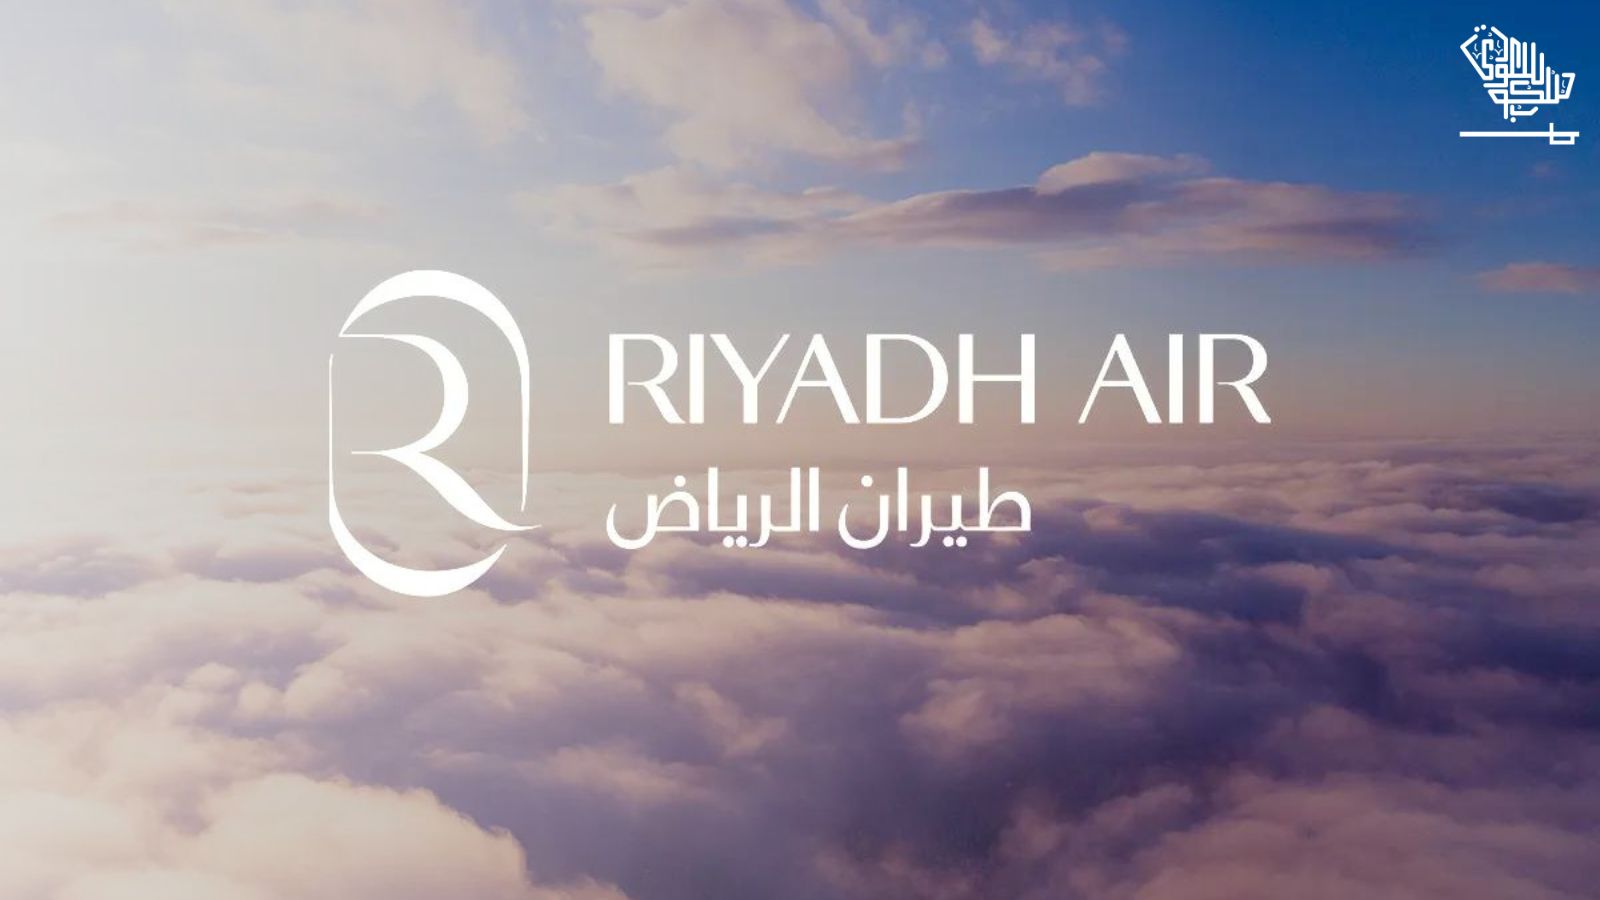 riyadh-air-saudi-scoop